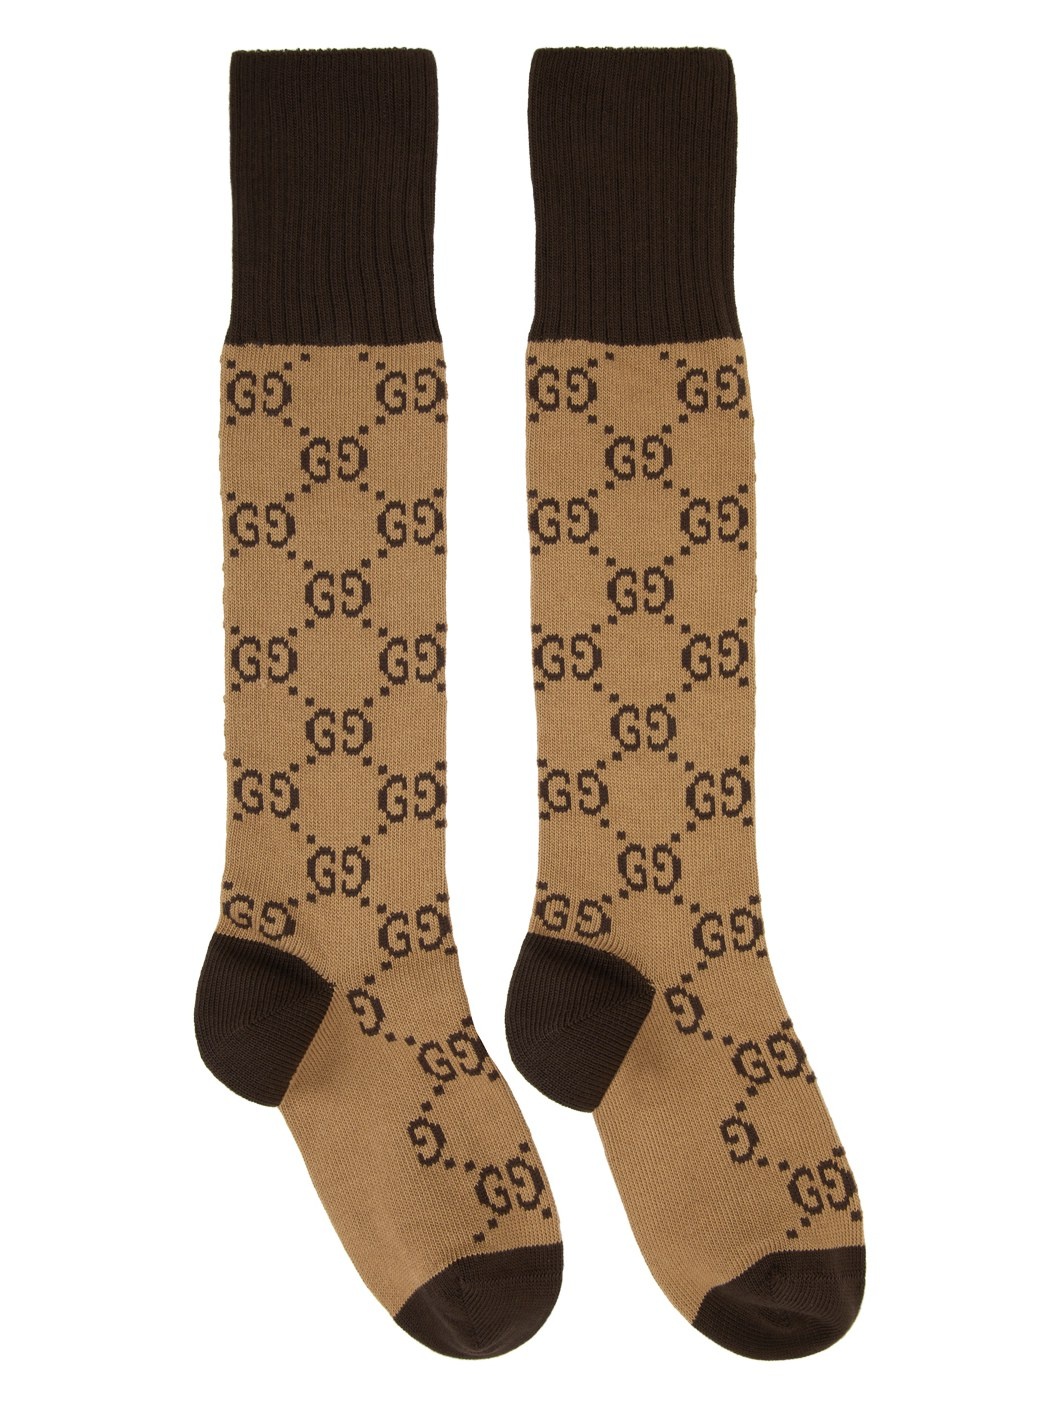 Beige & Brown GG Print Socks - 1